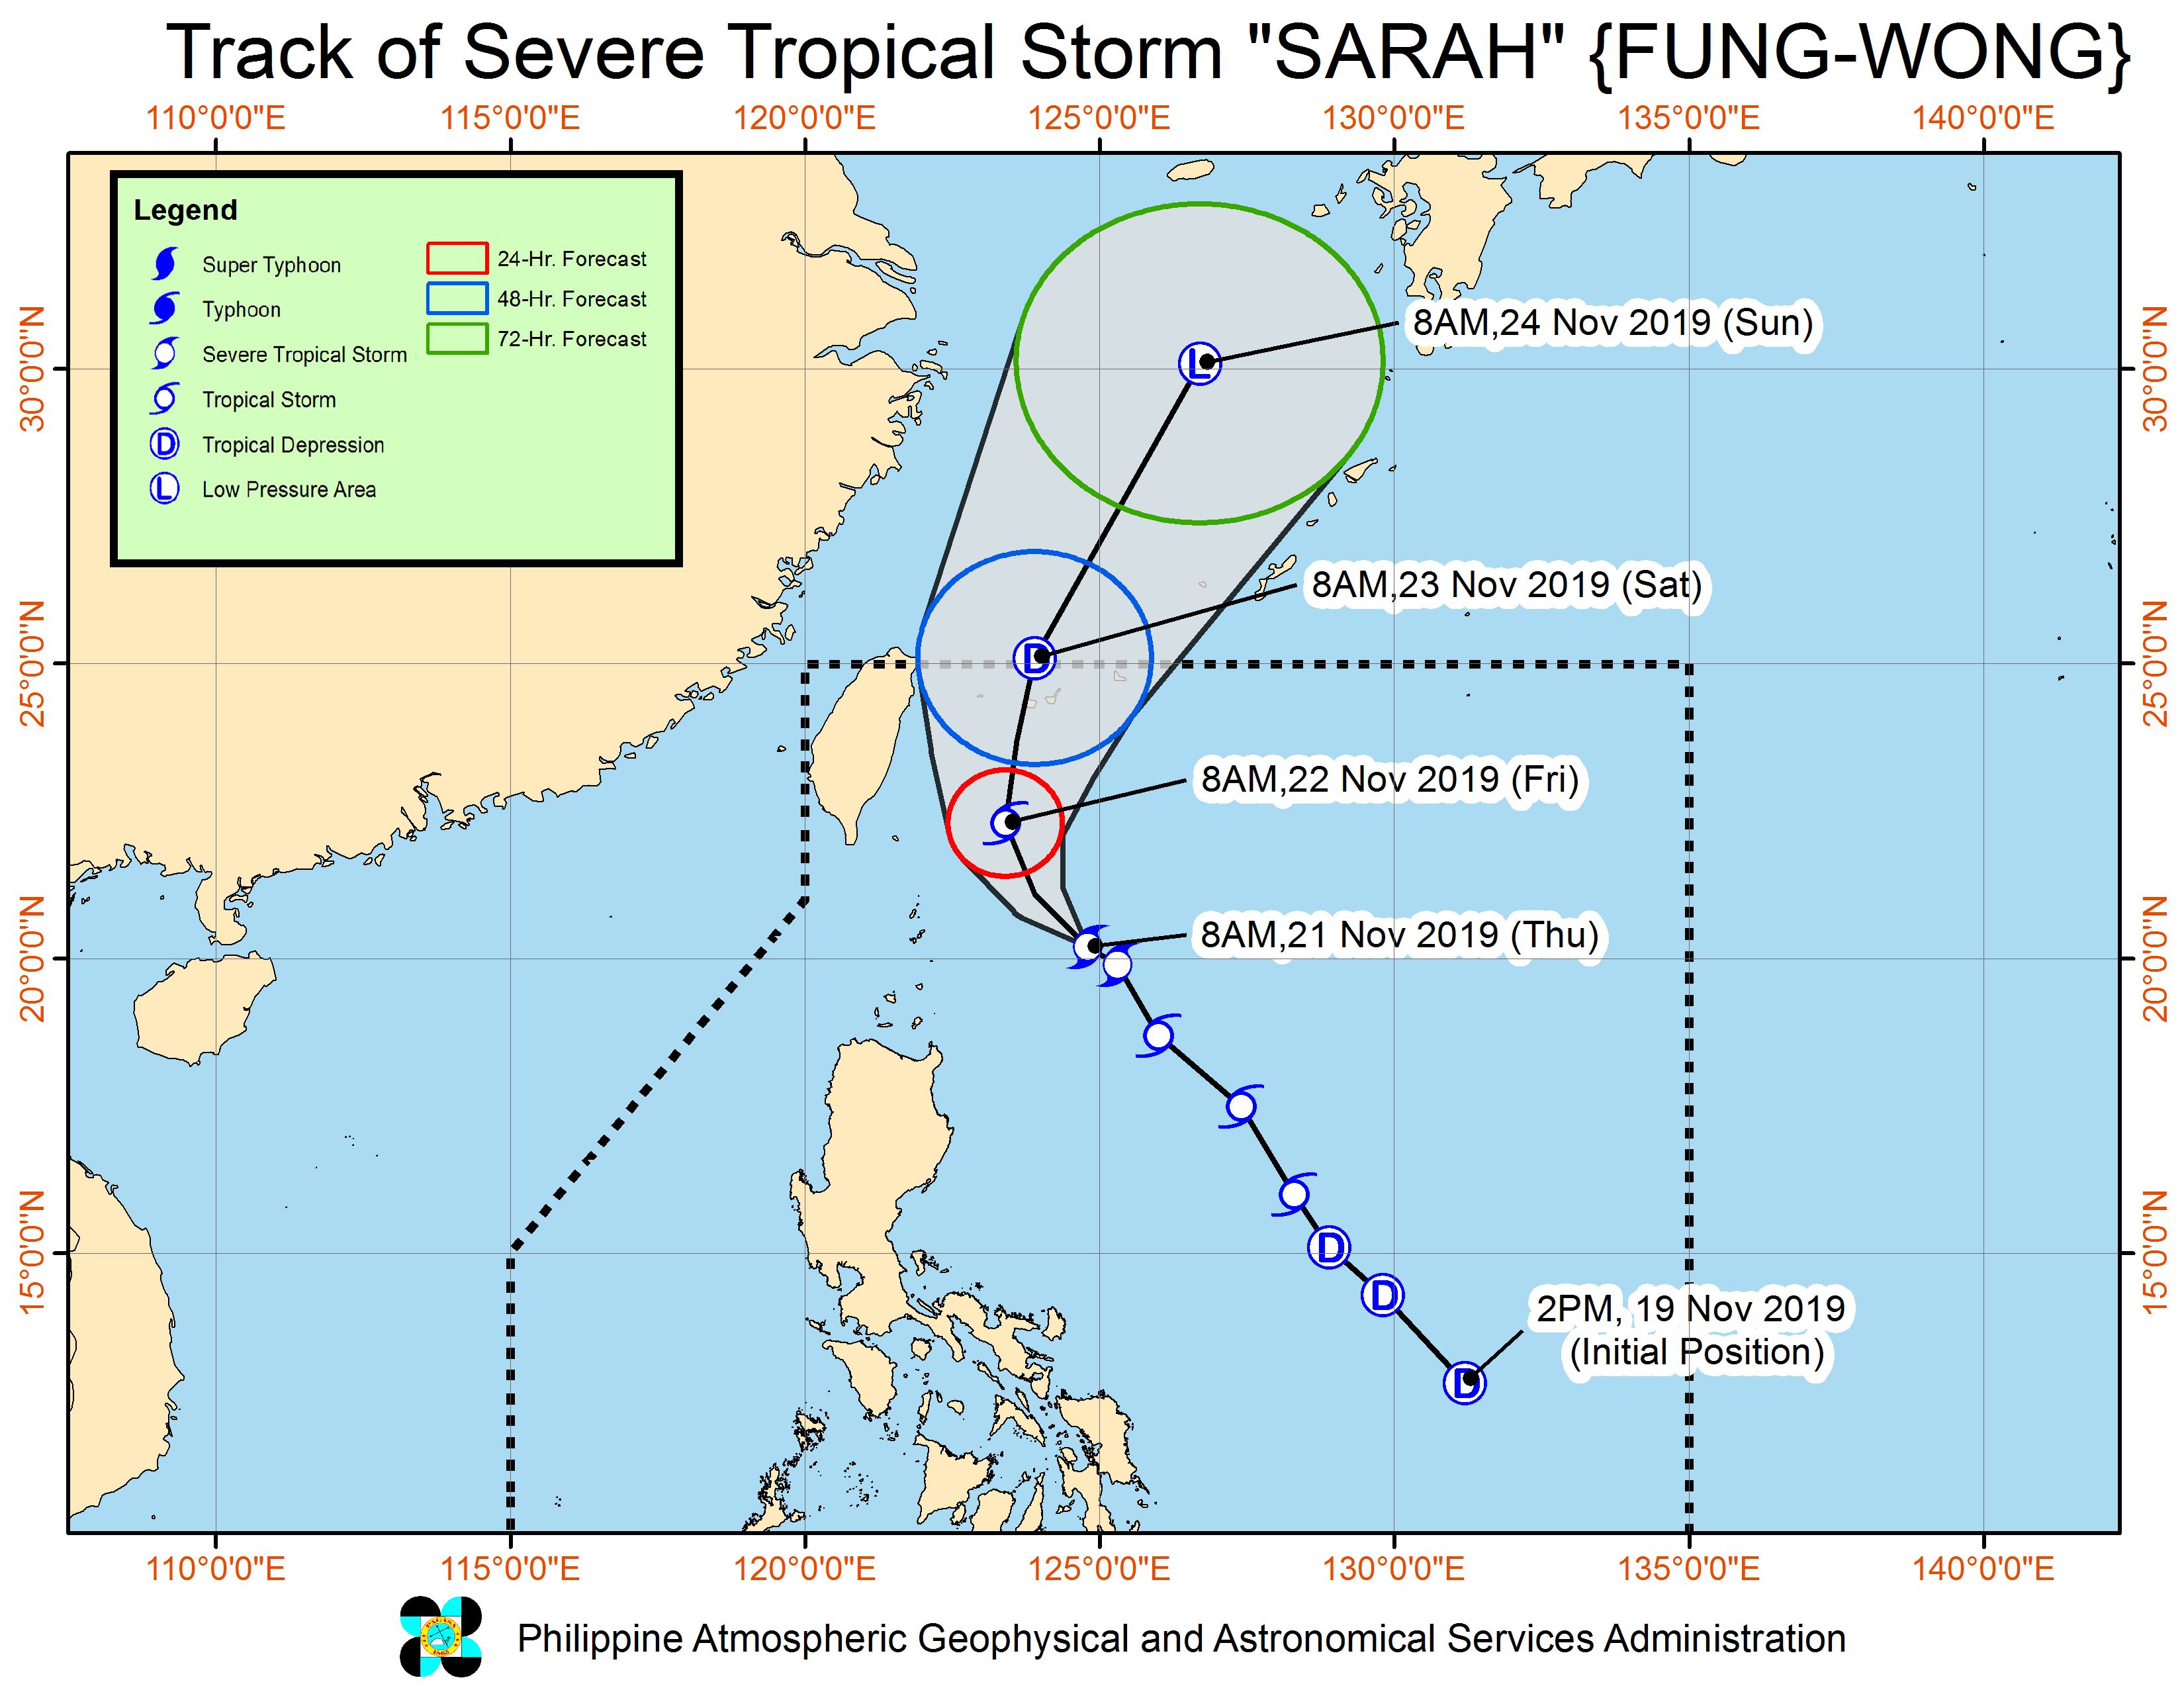 Forecast track of Severe Tropical Storm Sarah (Fung-wong) as of November 21, 2019, 11 am. Image from PAGASA 